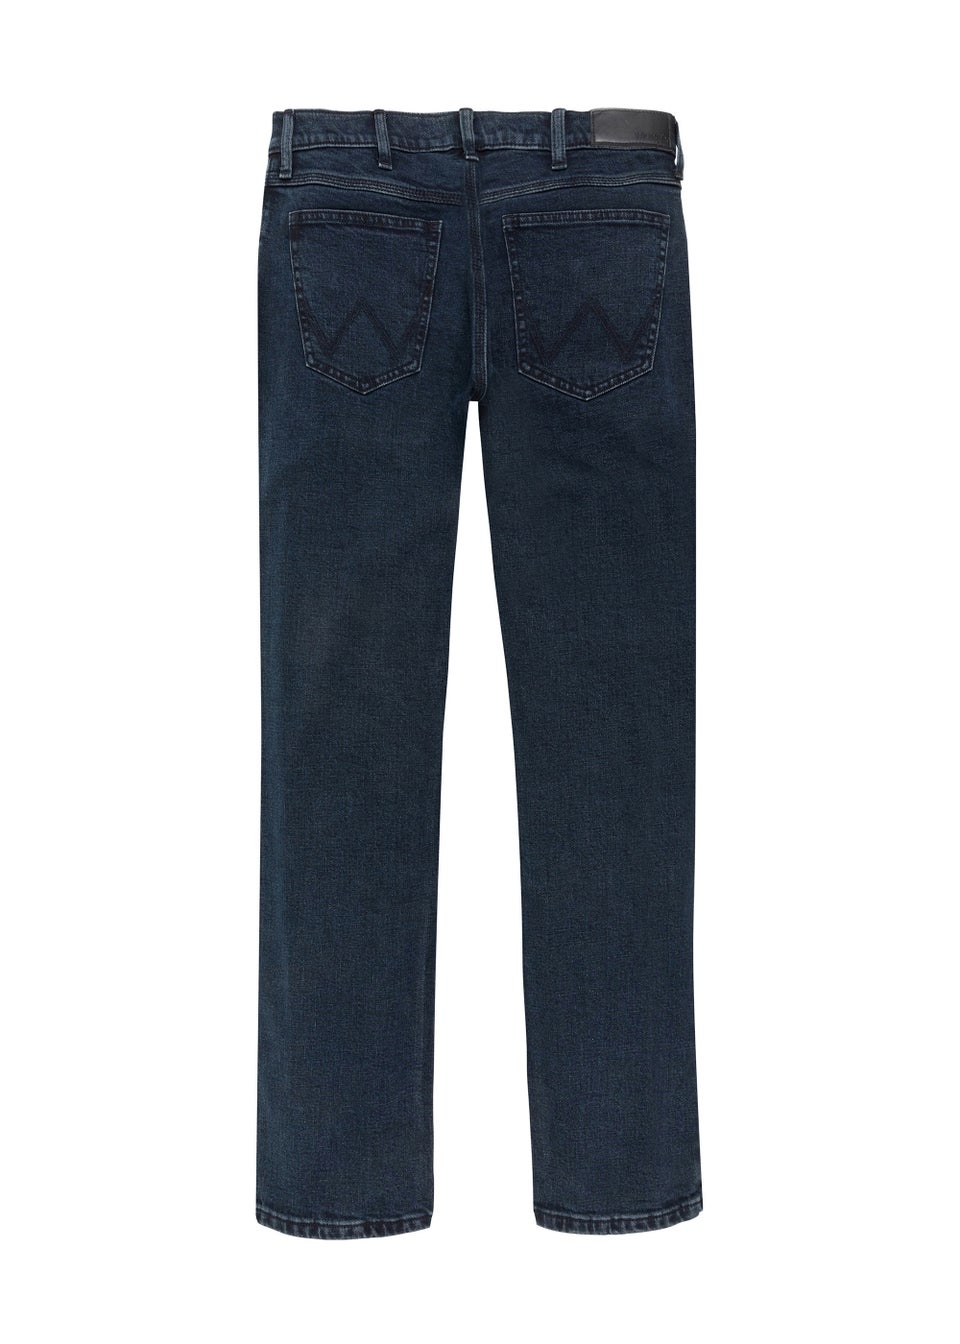 Wrangler Blue Black Regular Fit Jeans - Matalan